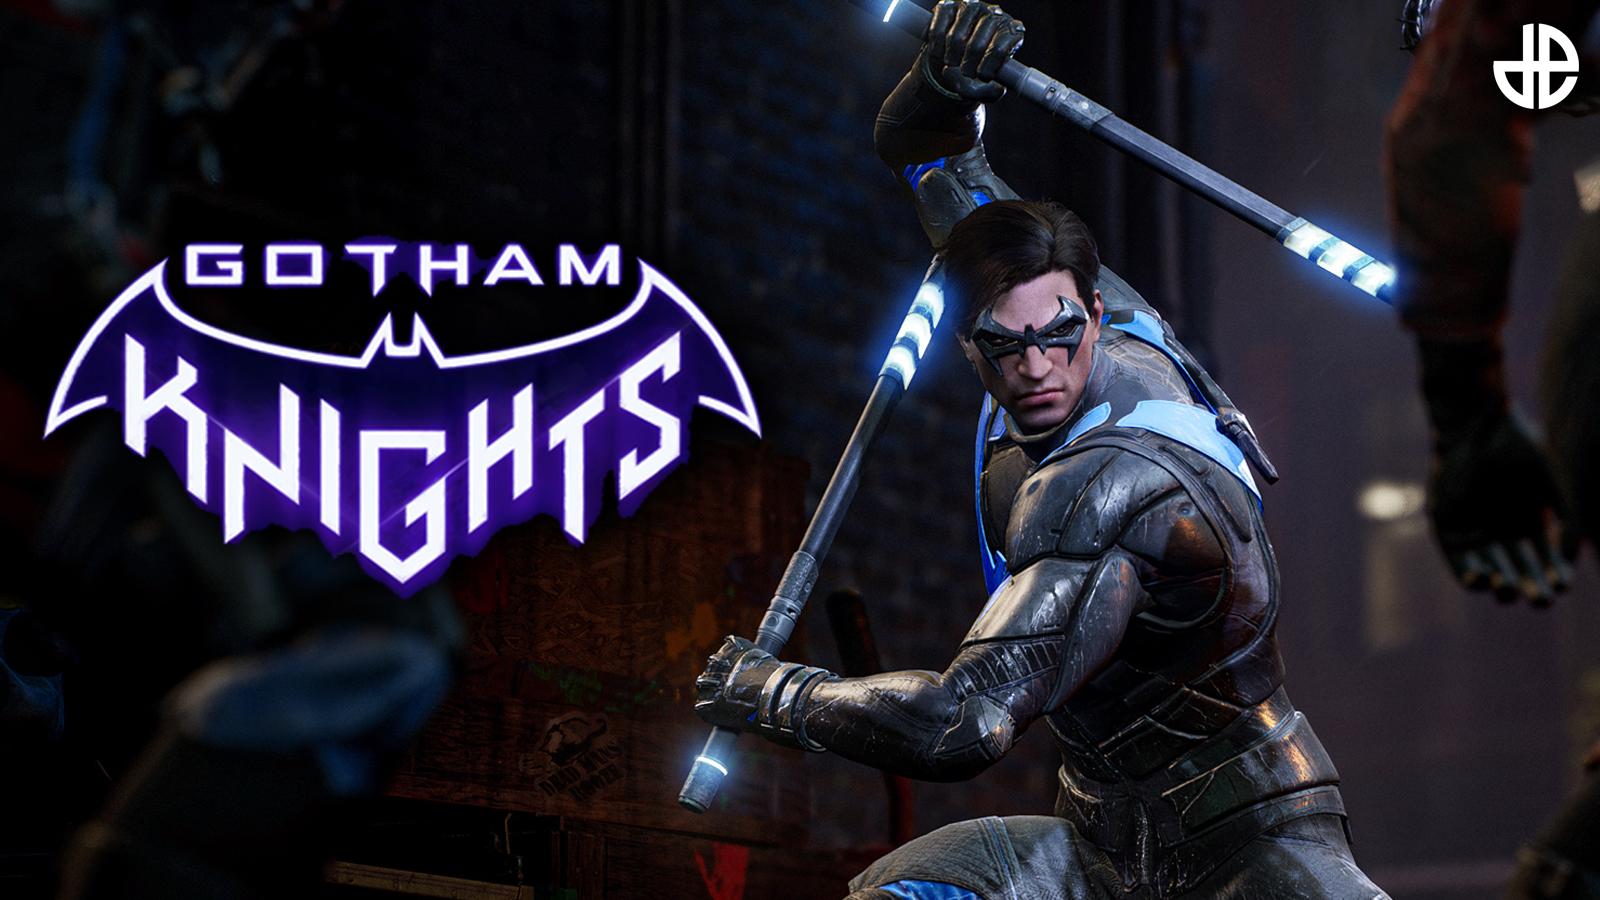 nightwing in gotham knights